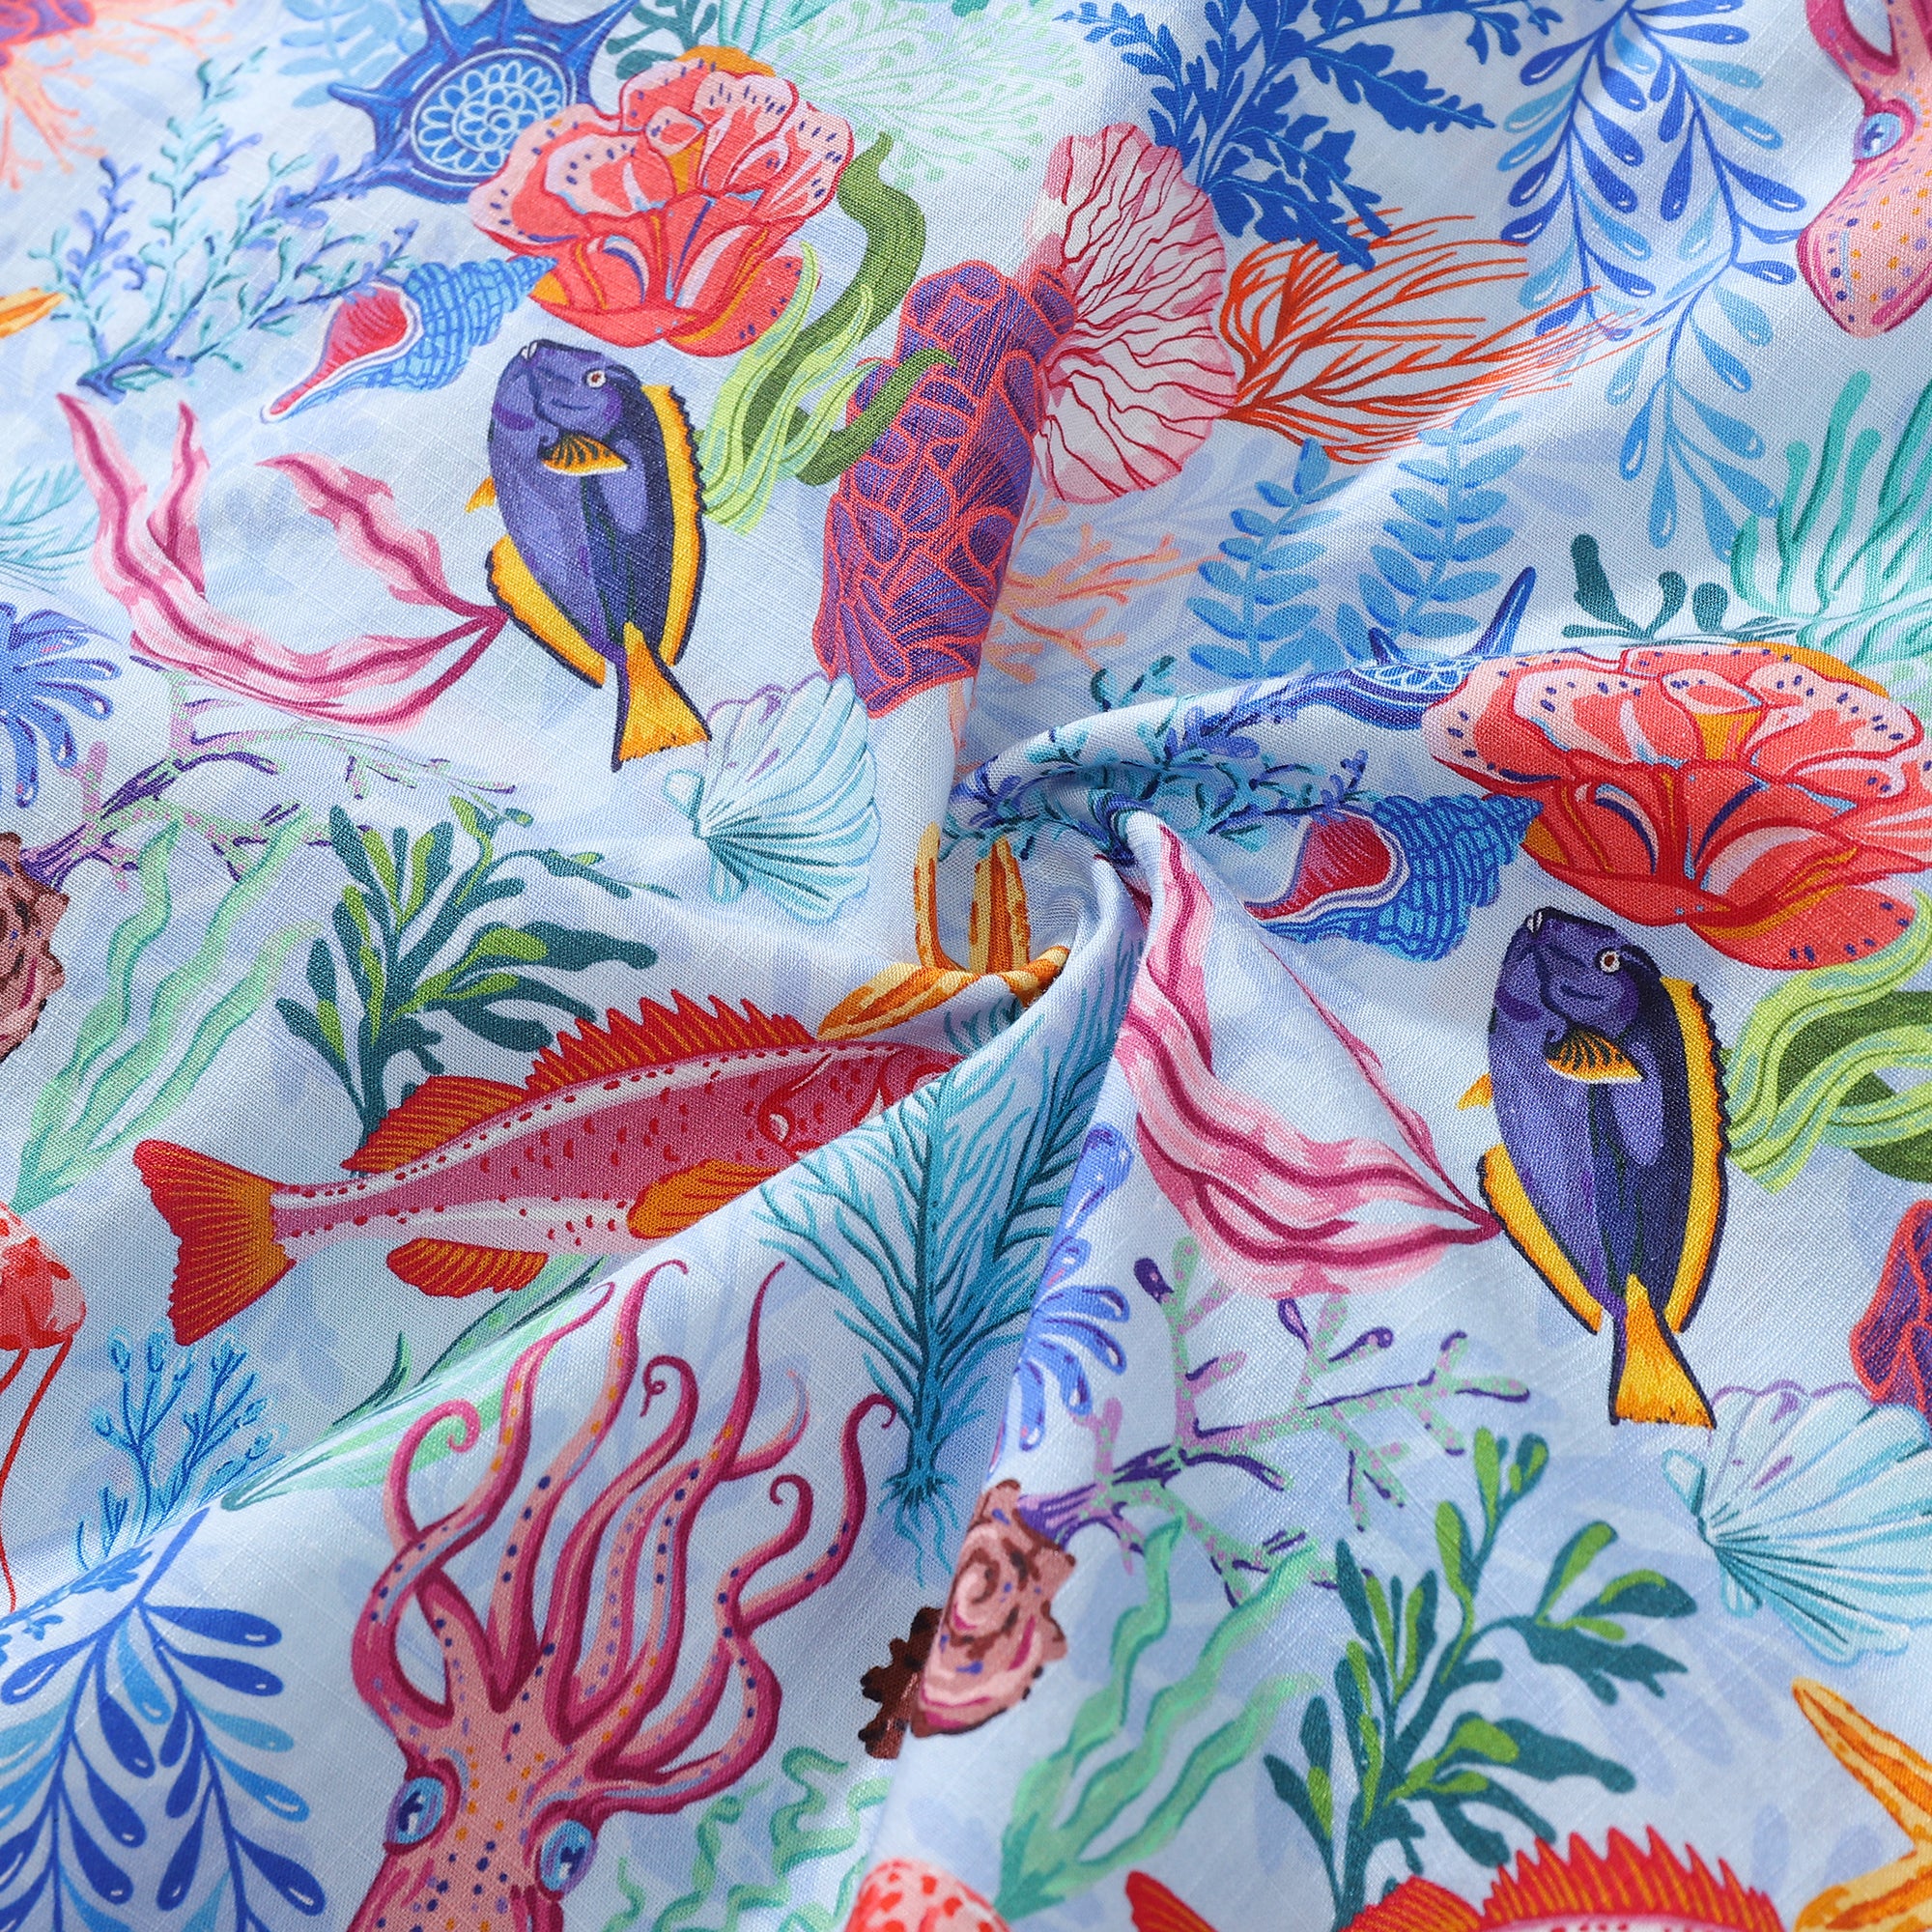 Hawaiian Men's Shirt with Colorful Ocean Print Short Sleeve